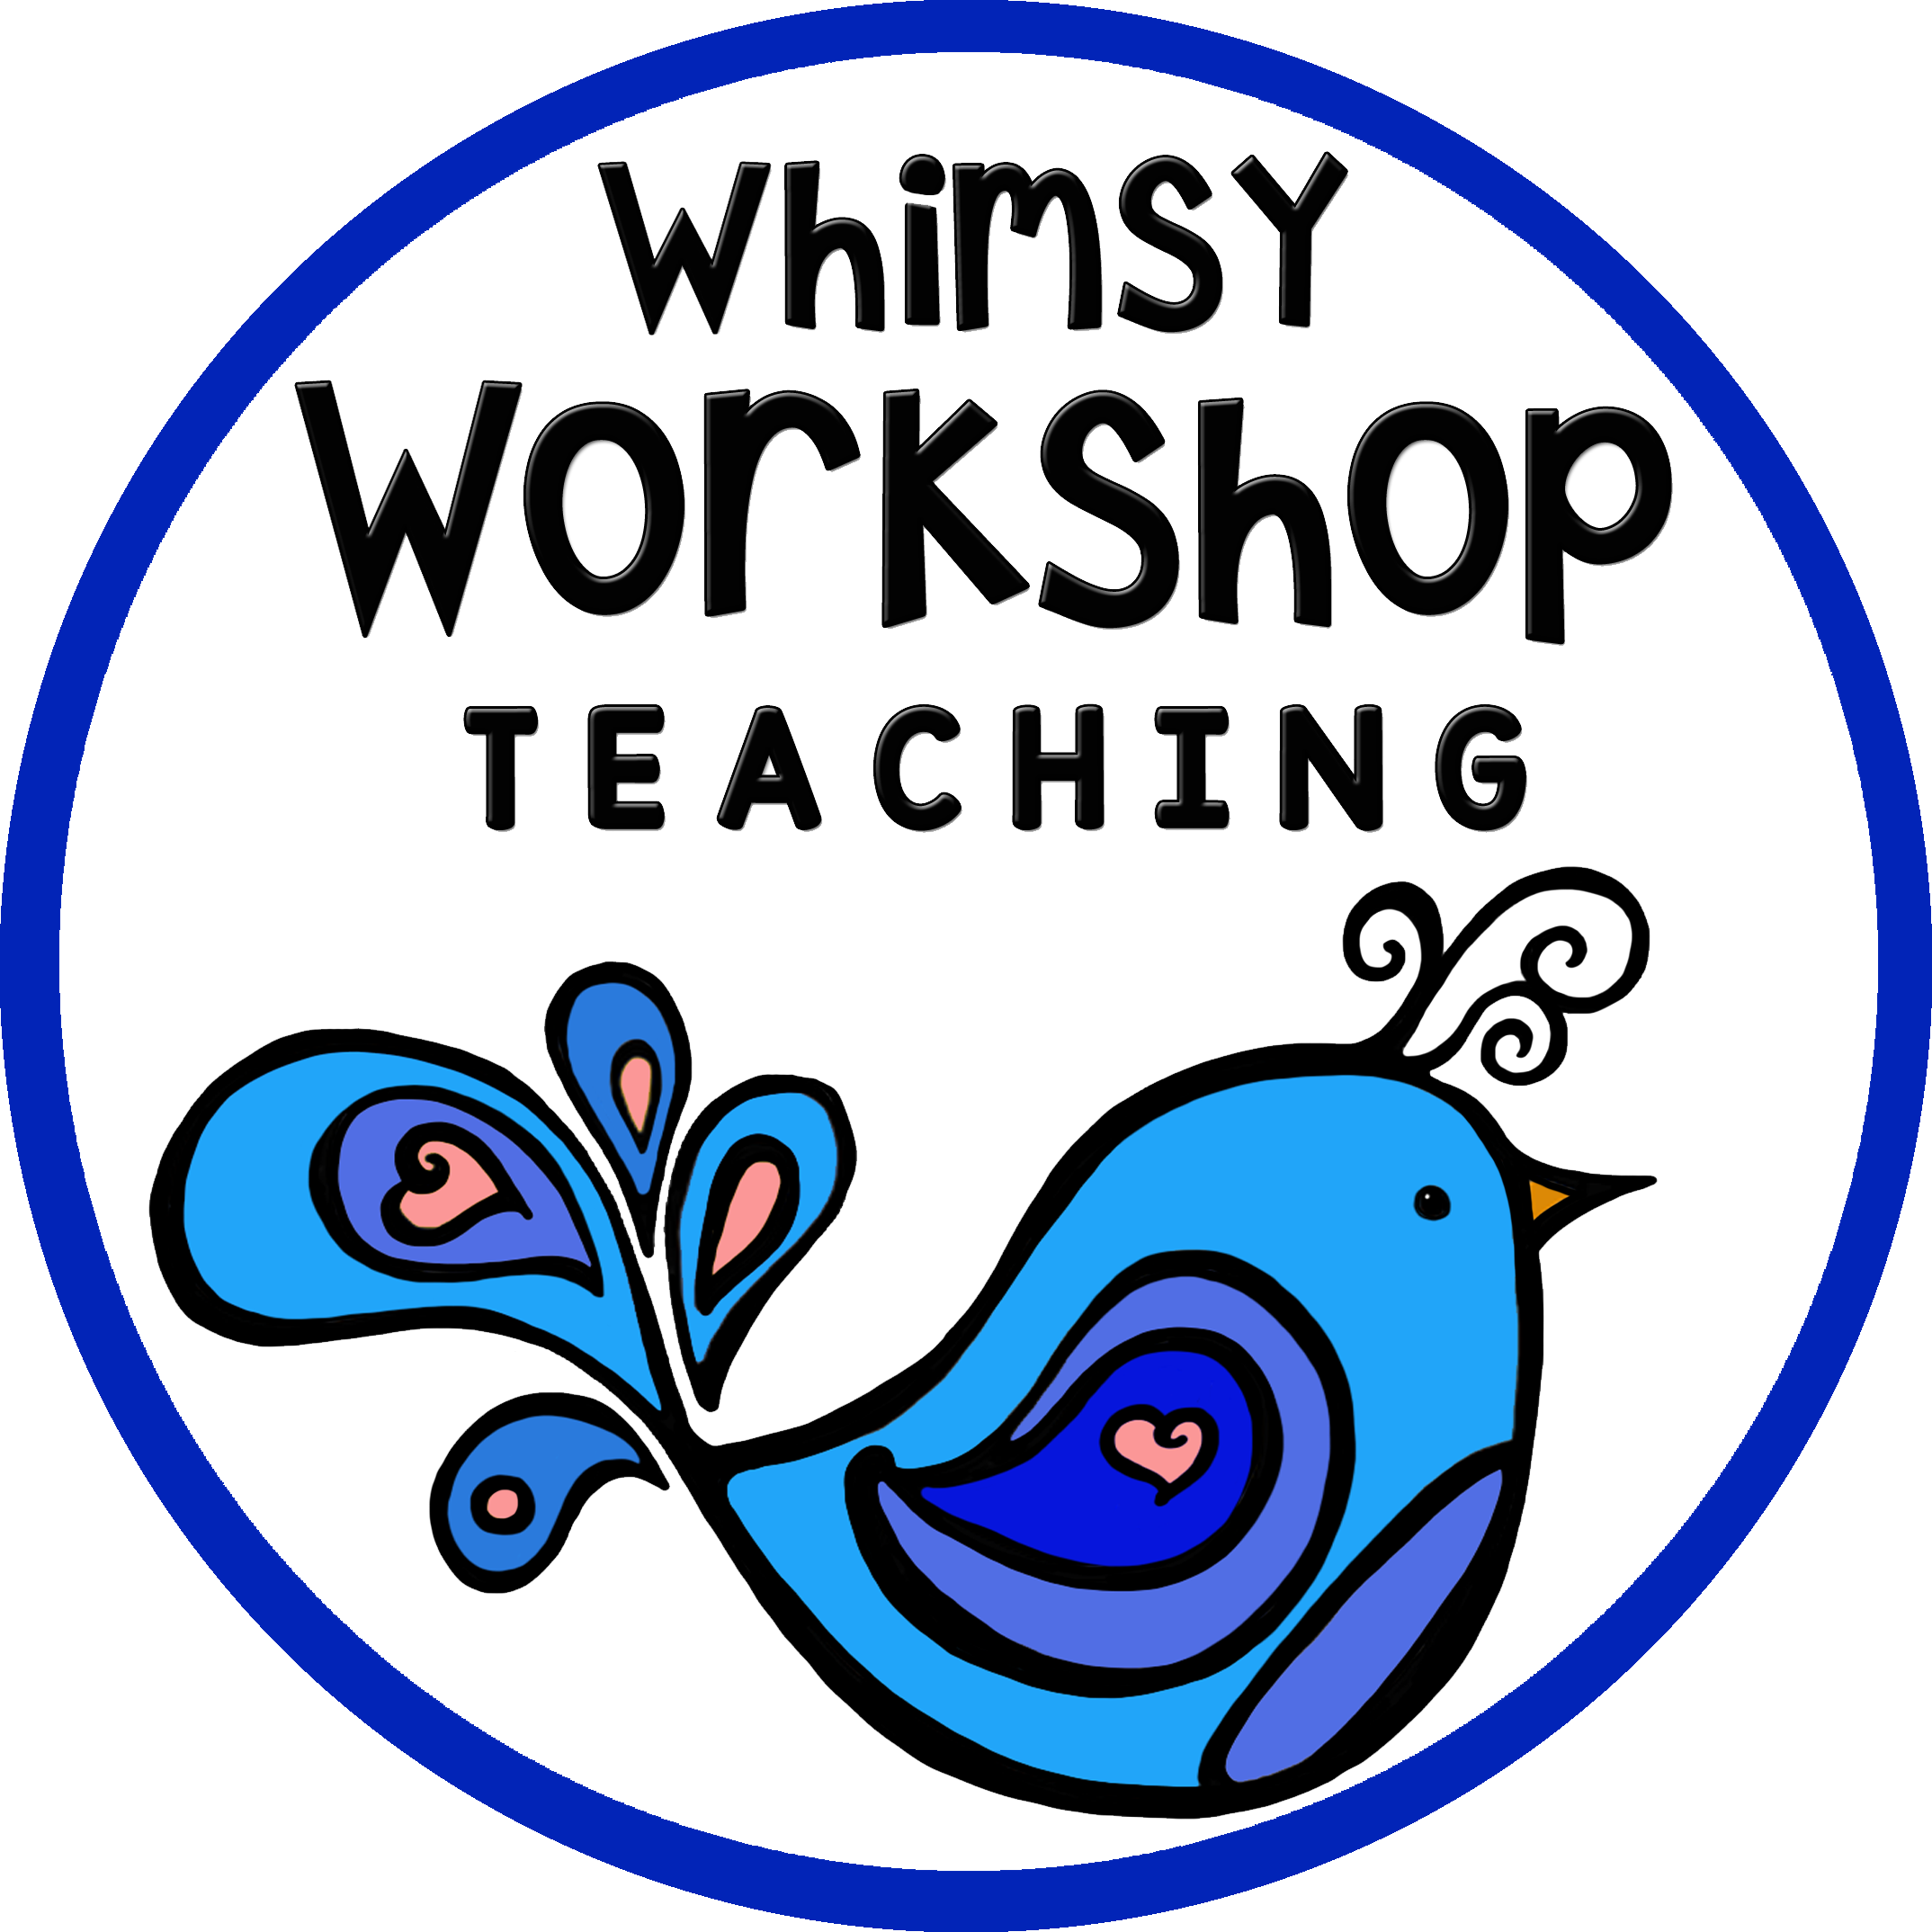 Whimsy Workshop Teaching - Round (2148x2148)